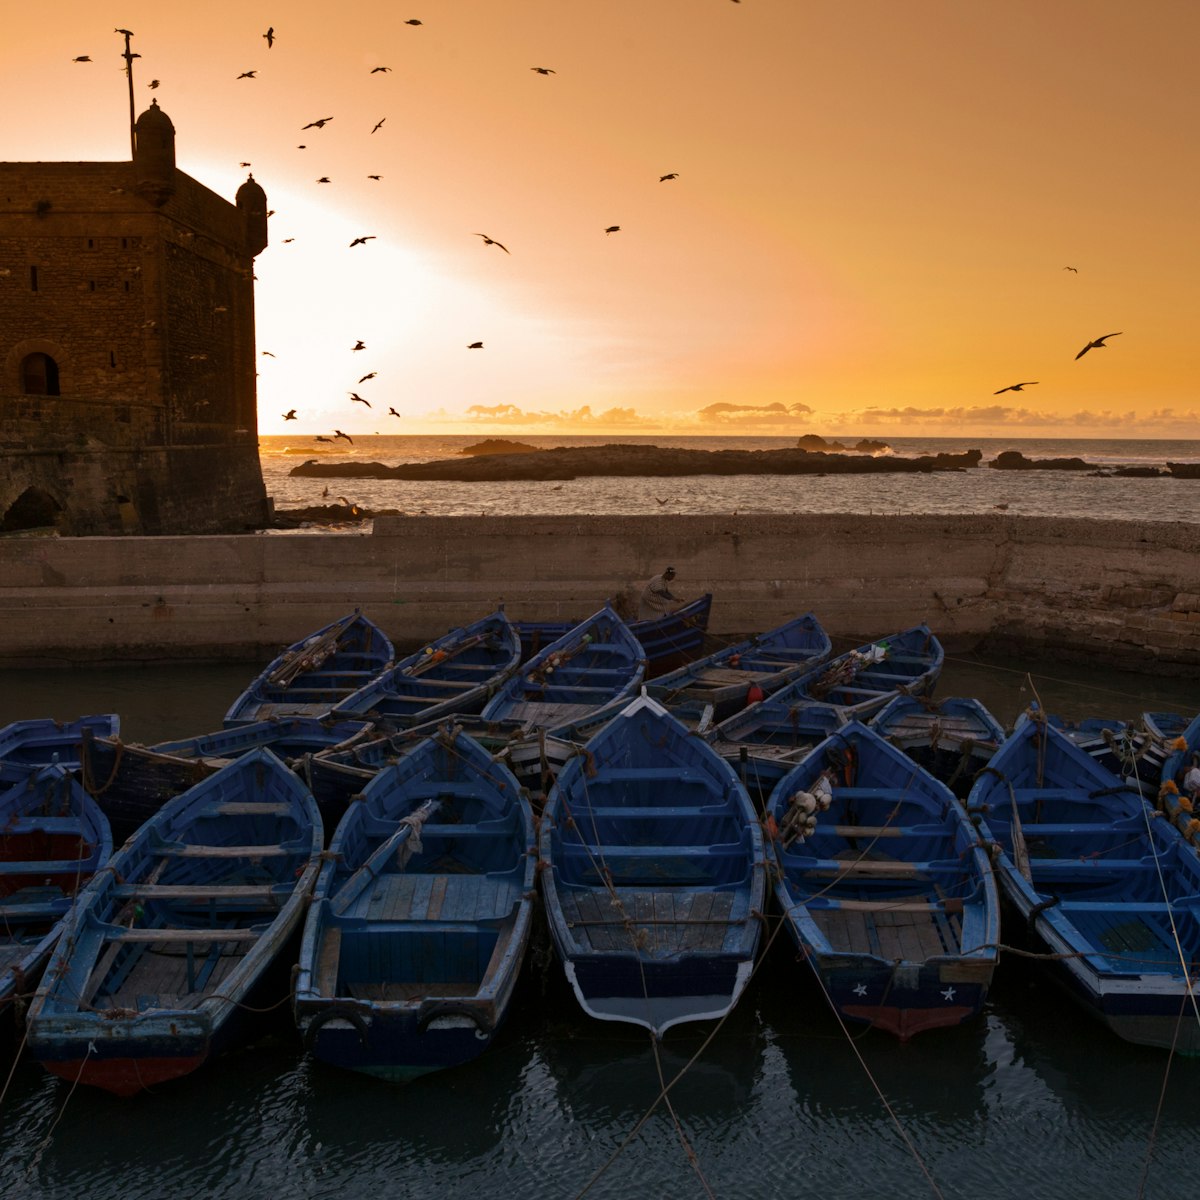 Boats docked in the Skala du port at sunset, Essaouira, Morocco